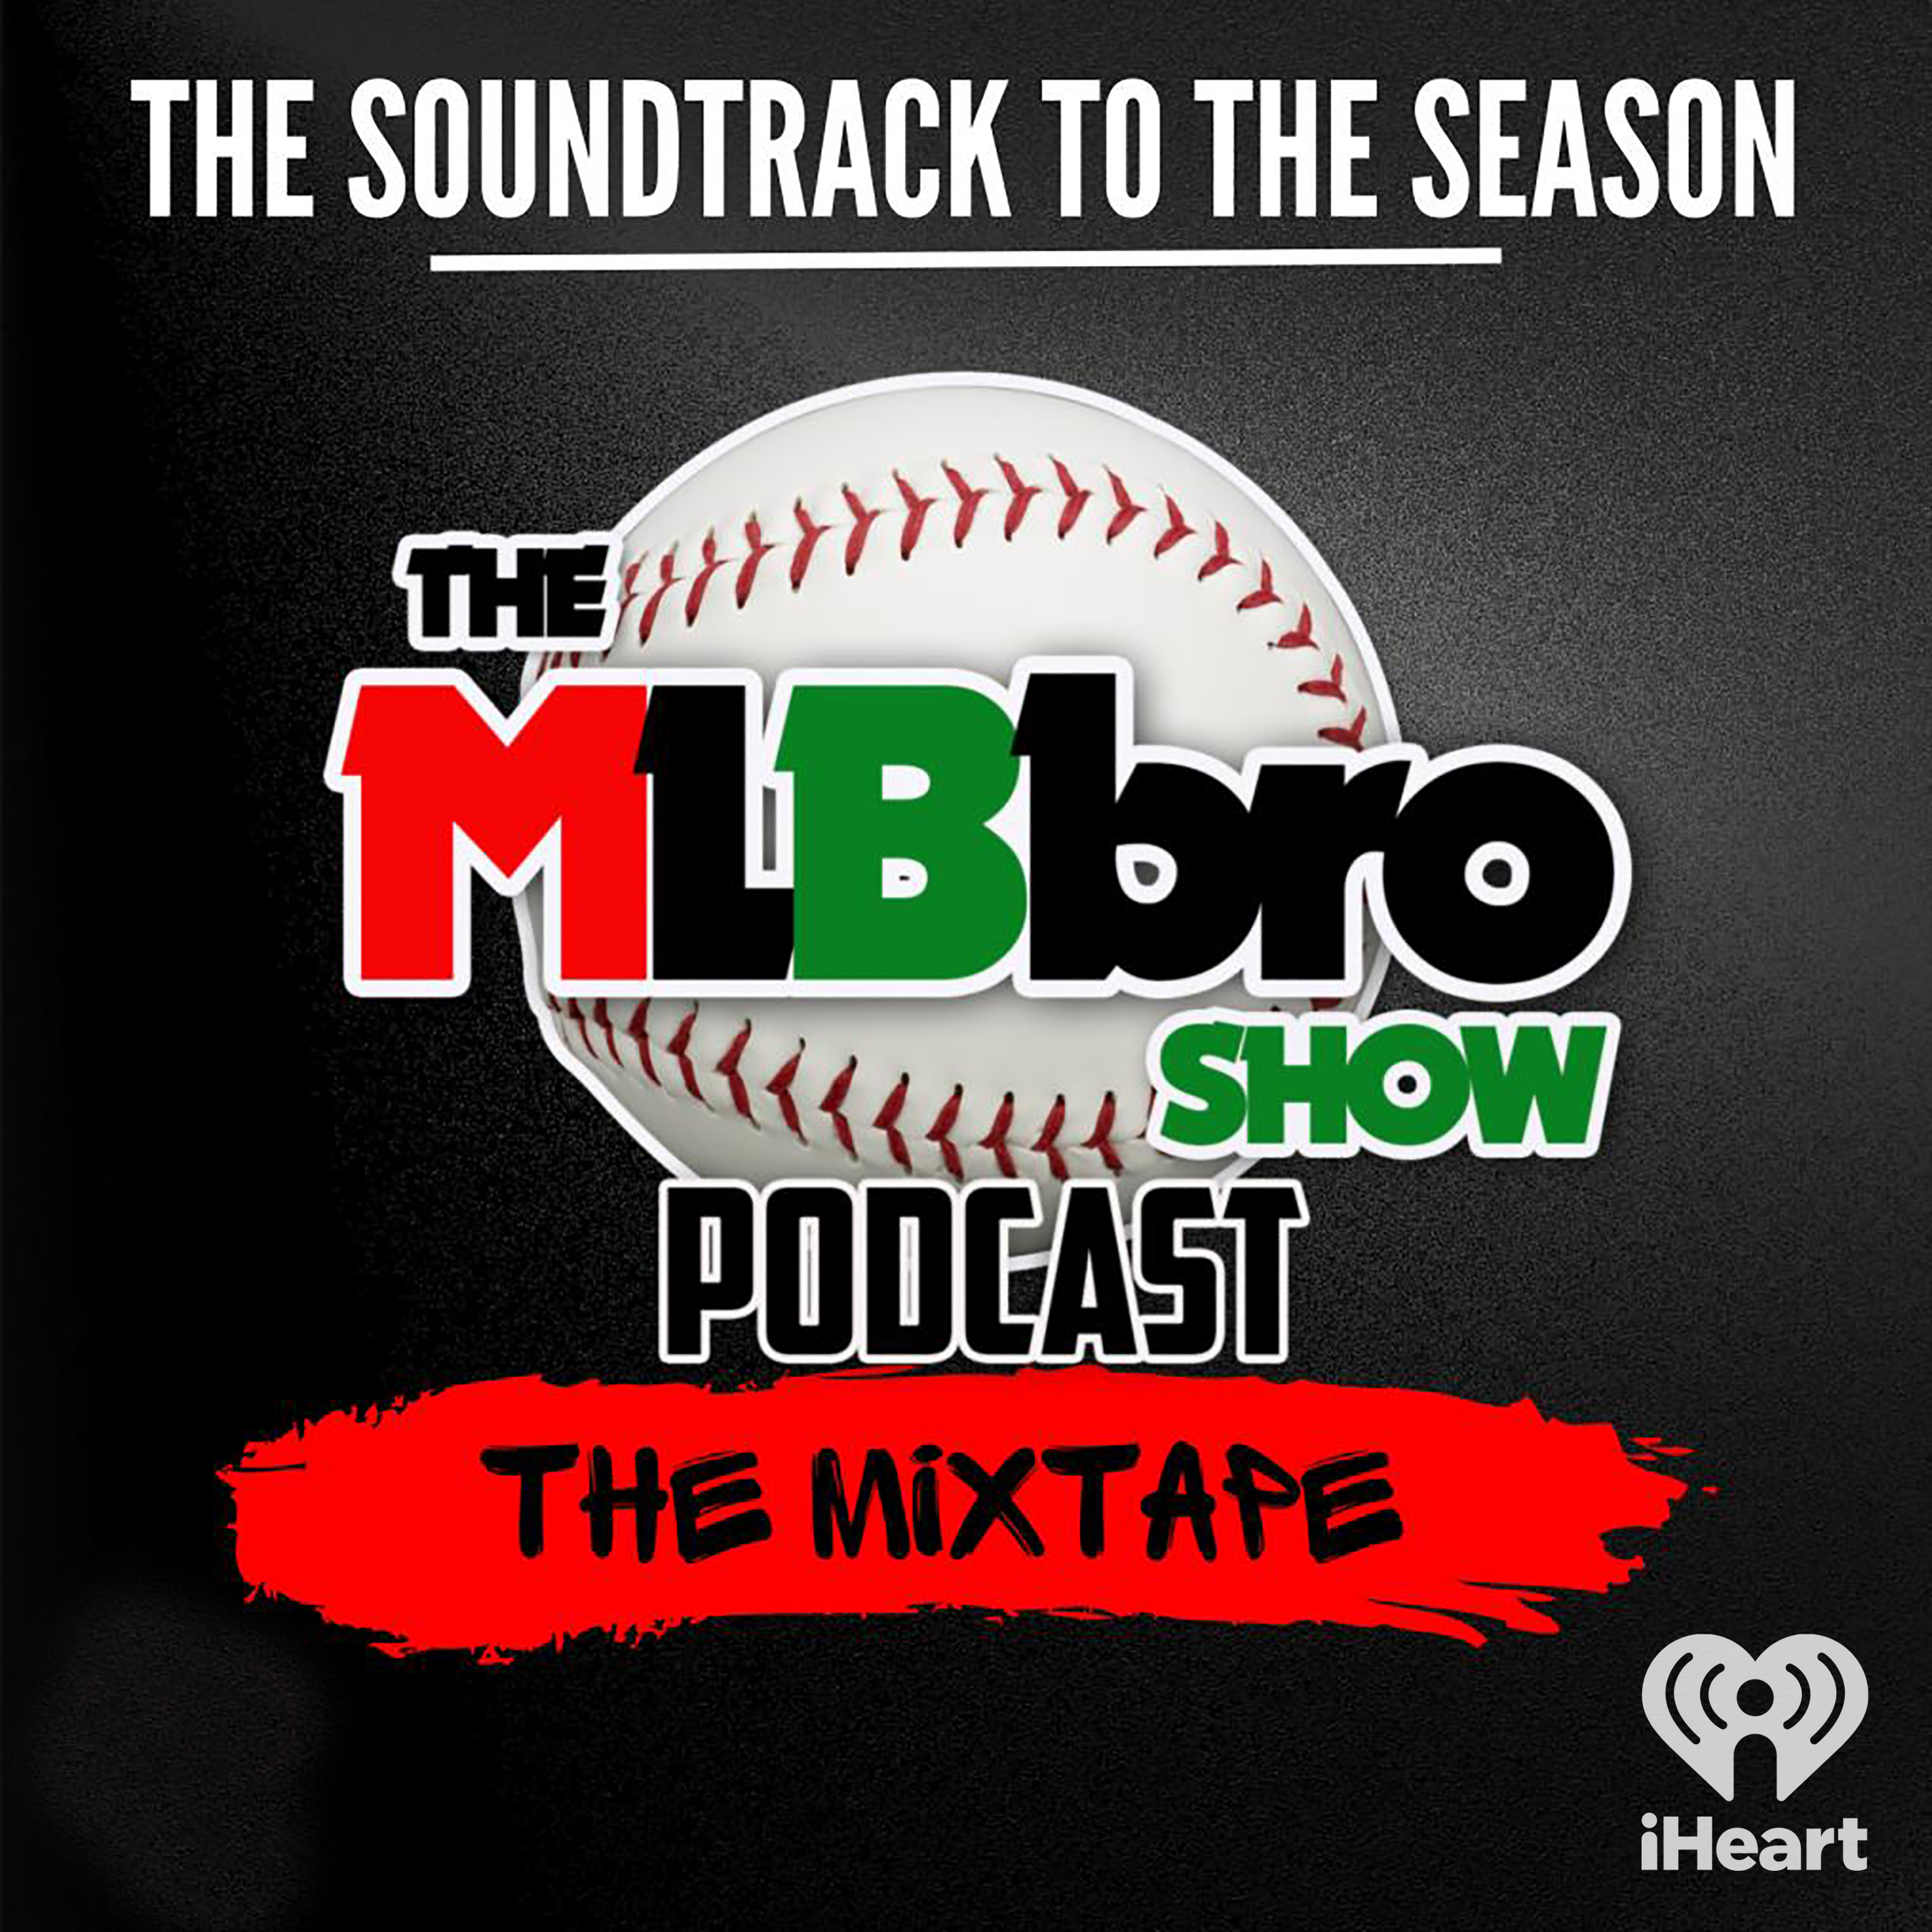 MLBbro Show Podcast The Mixtape Vol 3 Episode 18